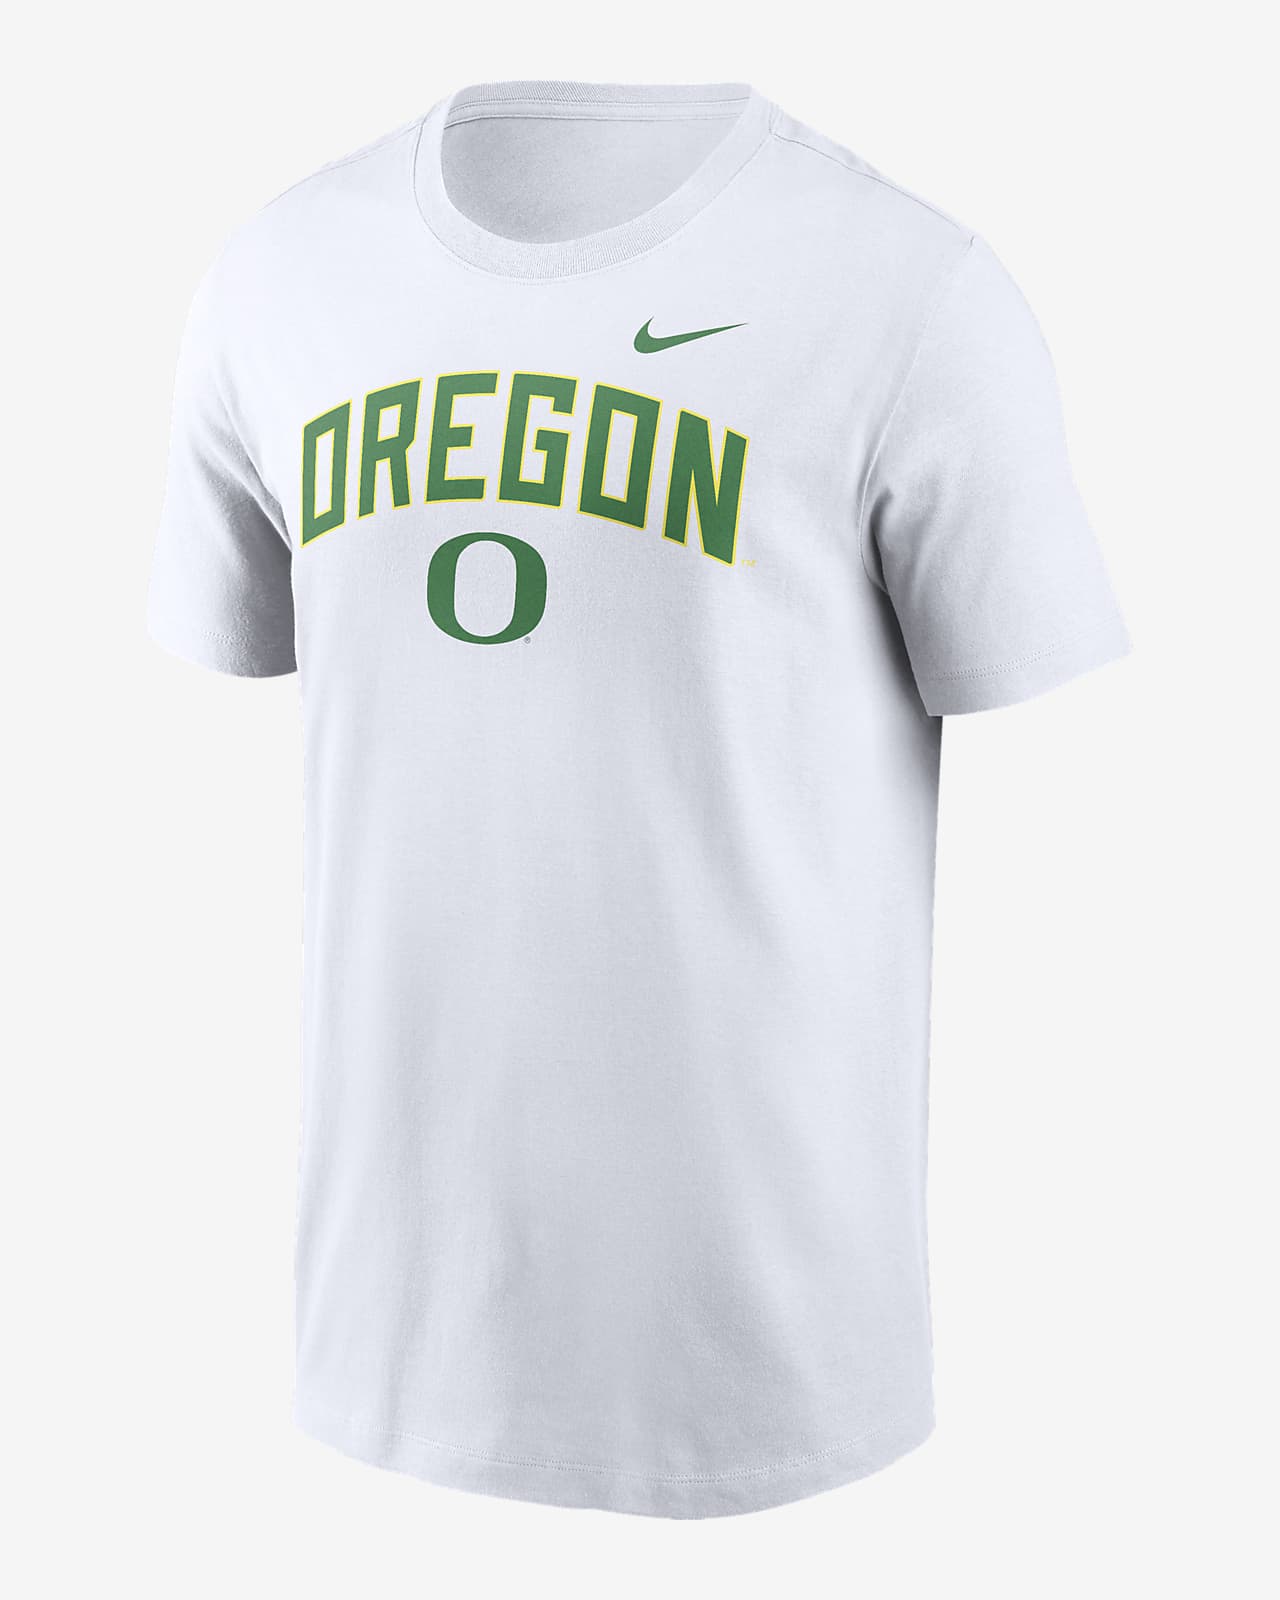 Oregon Ducks Blitz Men's Nike College T-Shirt